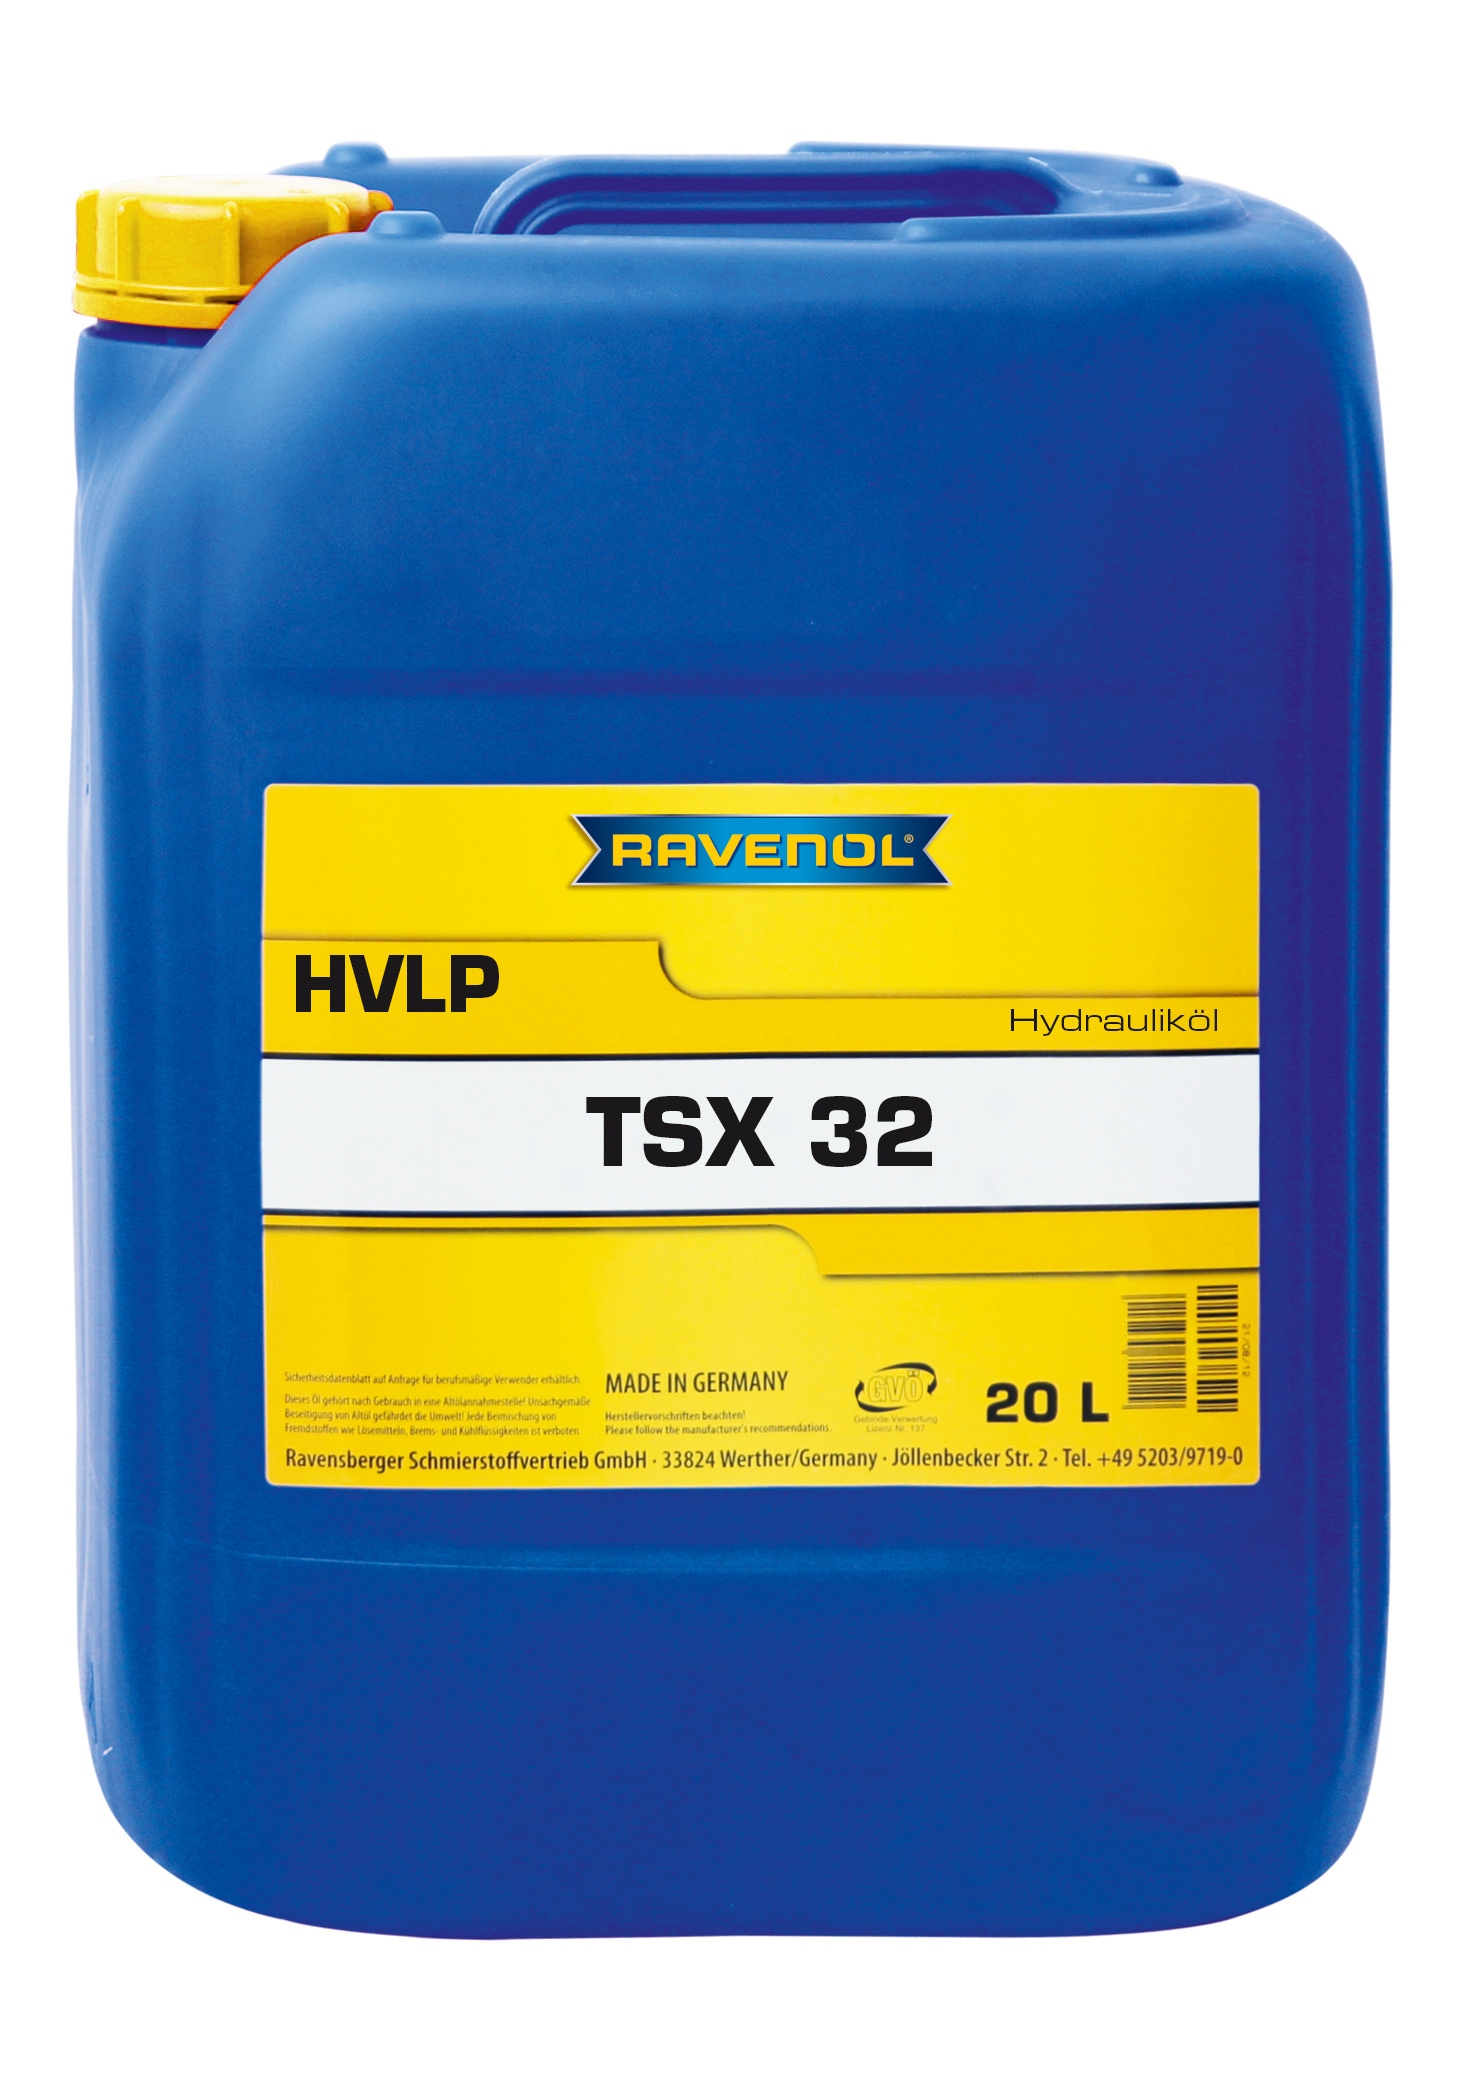 RAVENOL Hydraulikoel TSX 32 (HVLP)